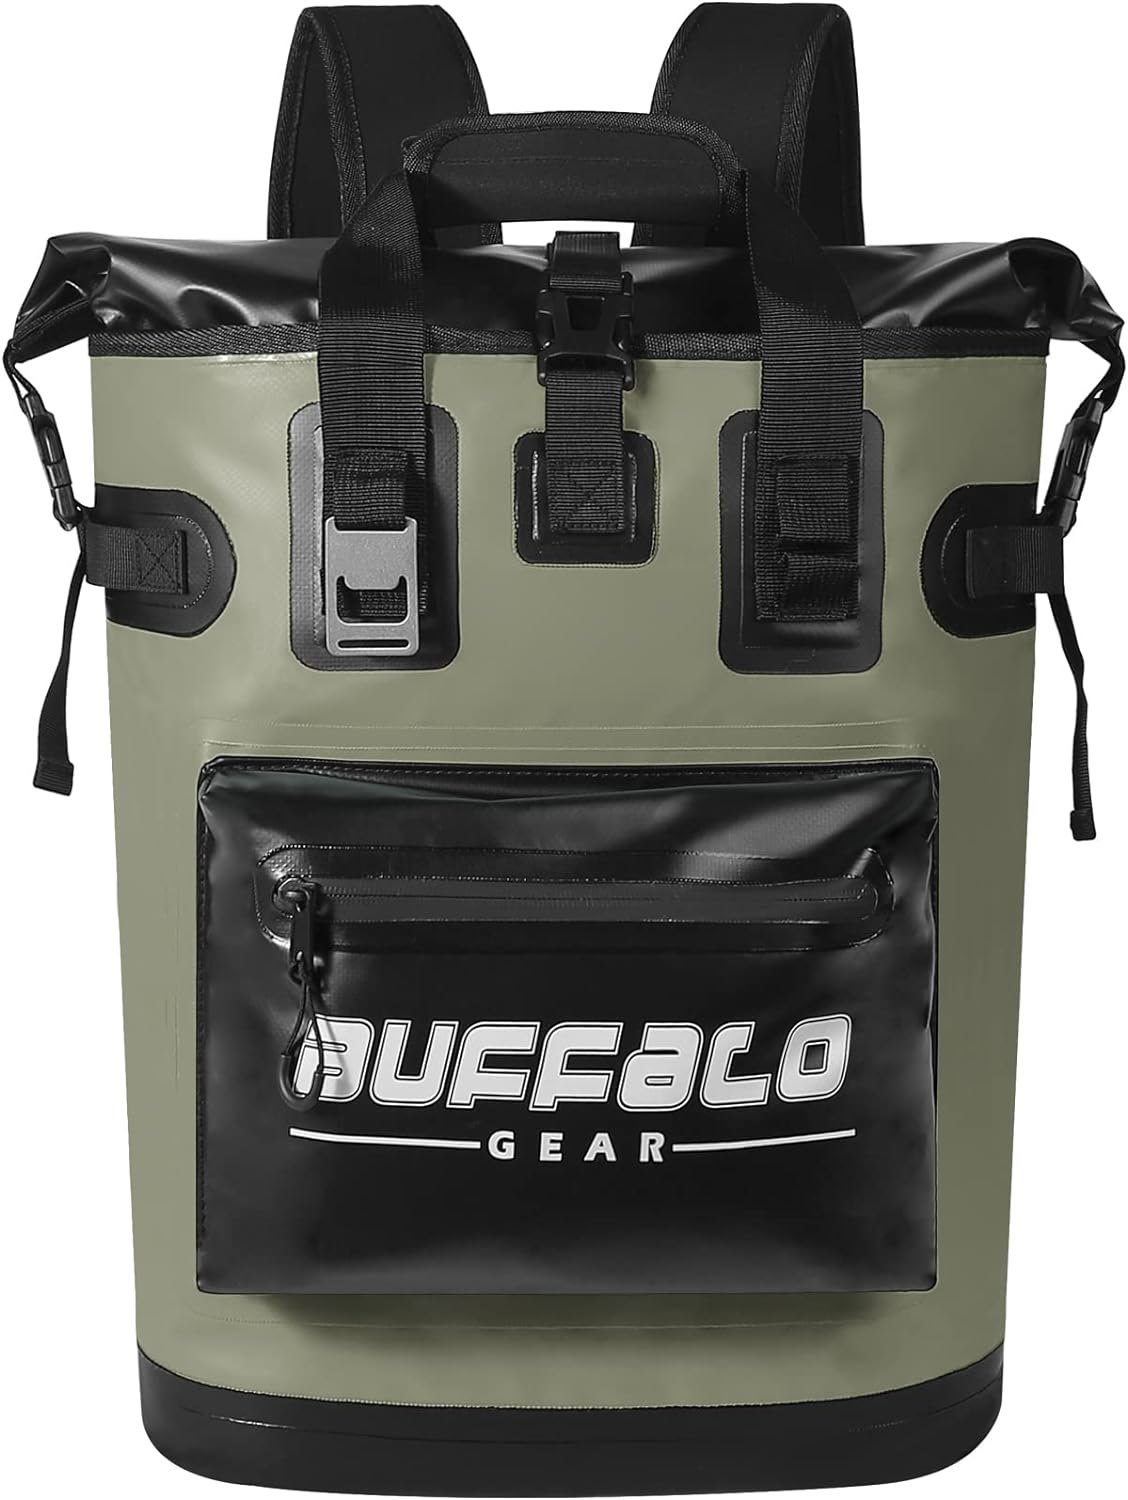 Buffalo Gear Cooler Backpack Review